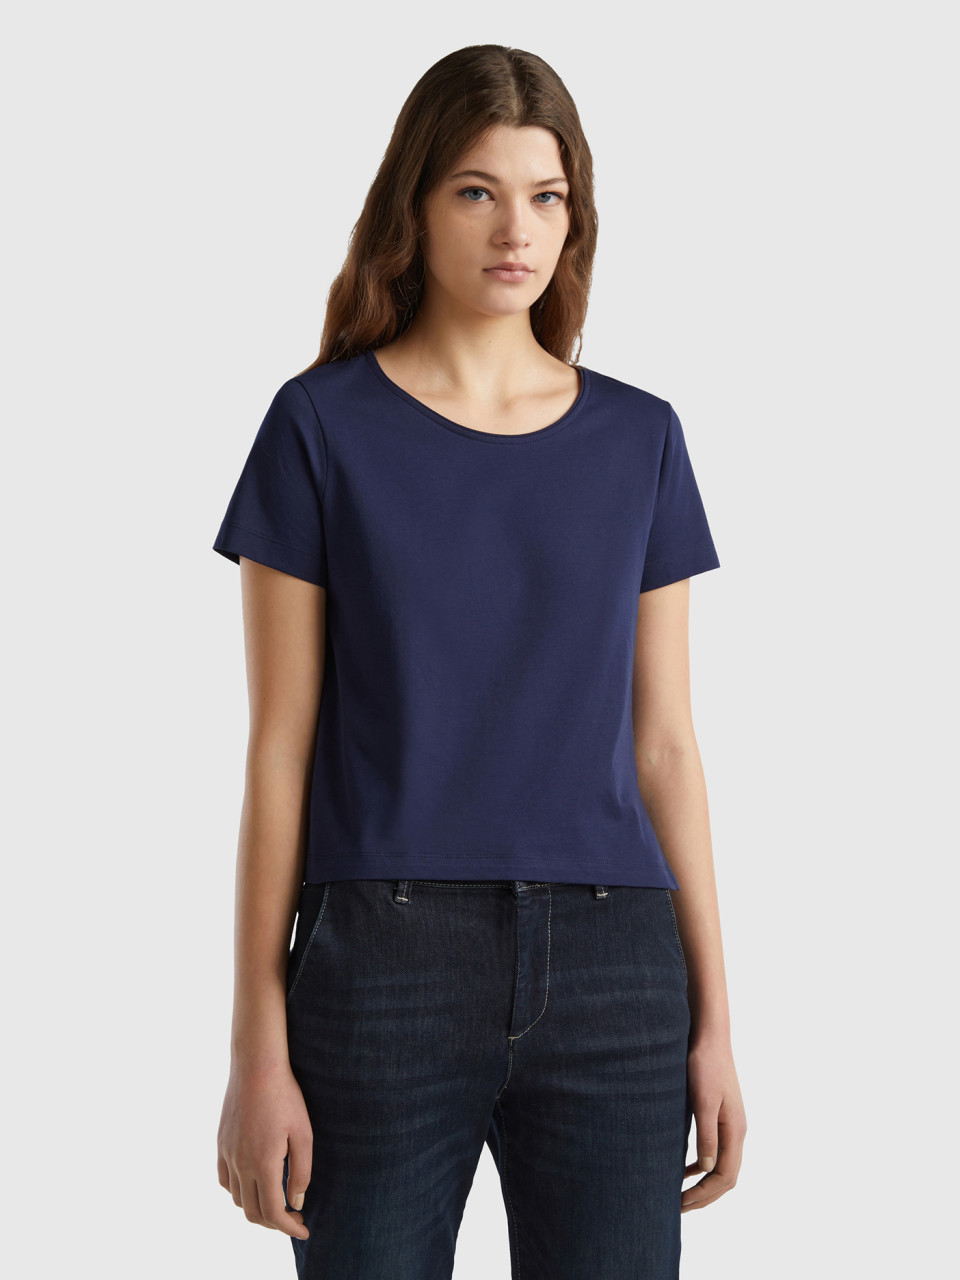 Benetton, Short Sleeve T-shirt With Slit, Dark Blue, Women